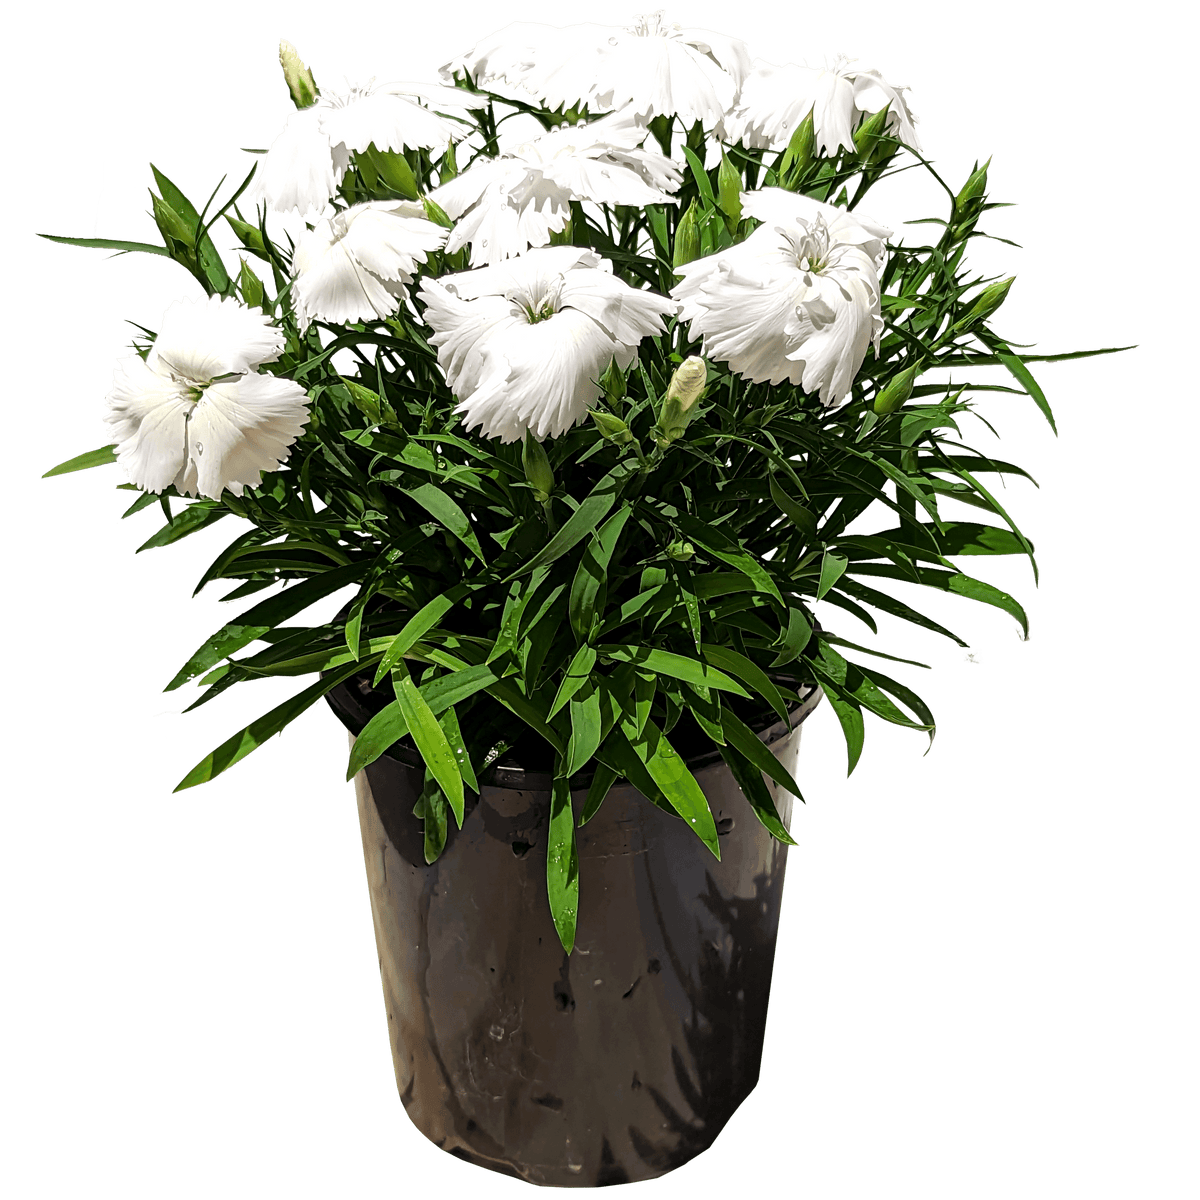 Dianthus chinesis - Dianthus Coronet White